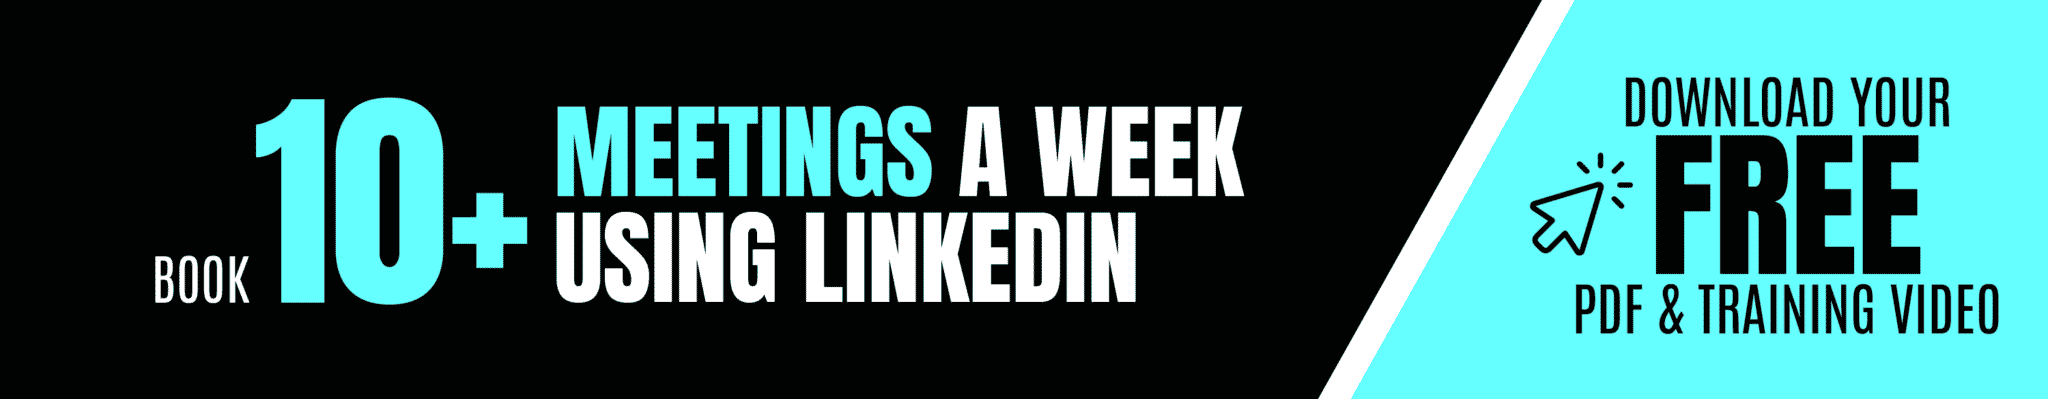 How to book 10+ Meetings LinkedIn